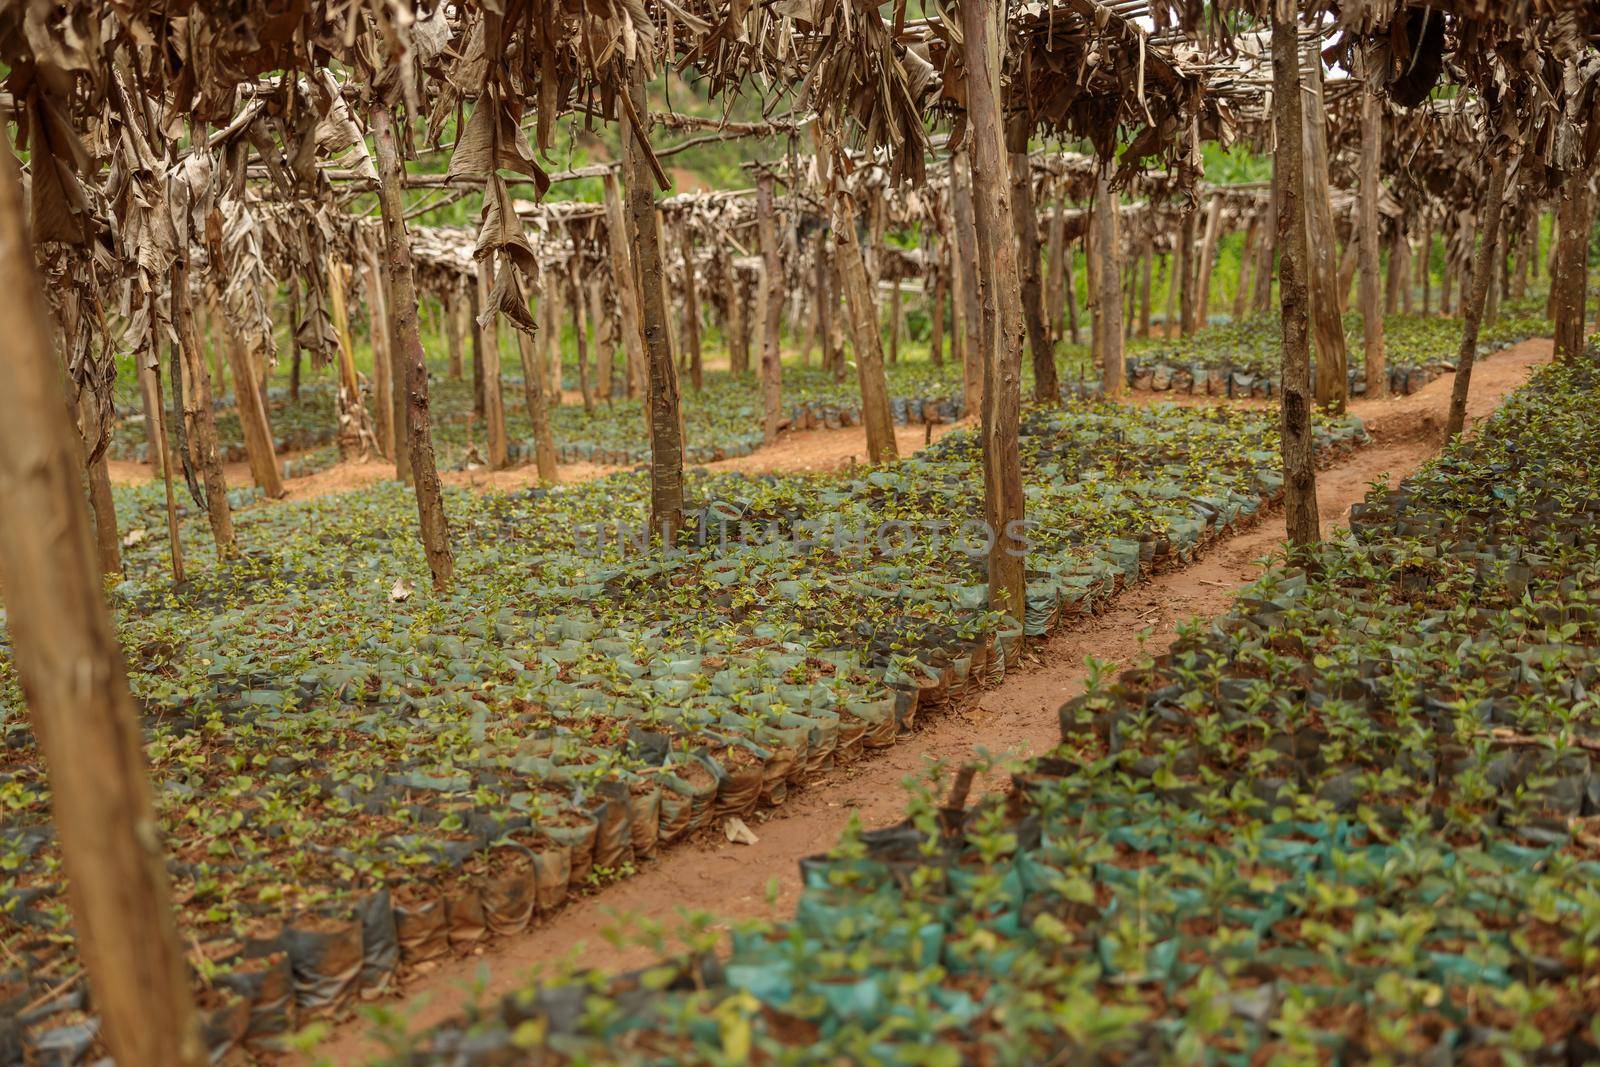 Coffee Arabica plants of seedlings and trees on coffee farm in rural region, South America